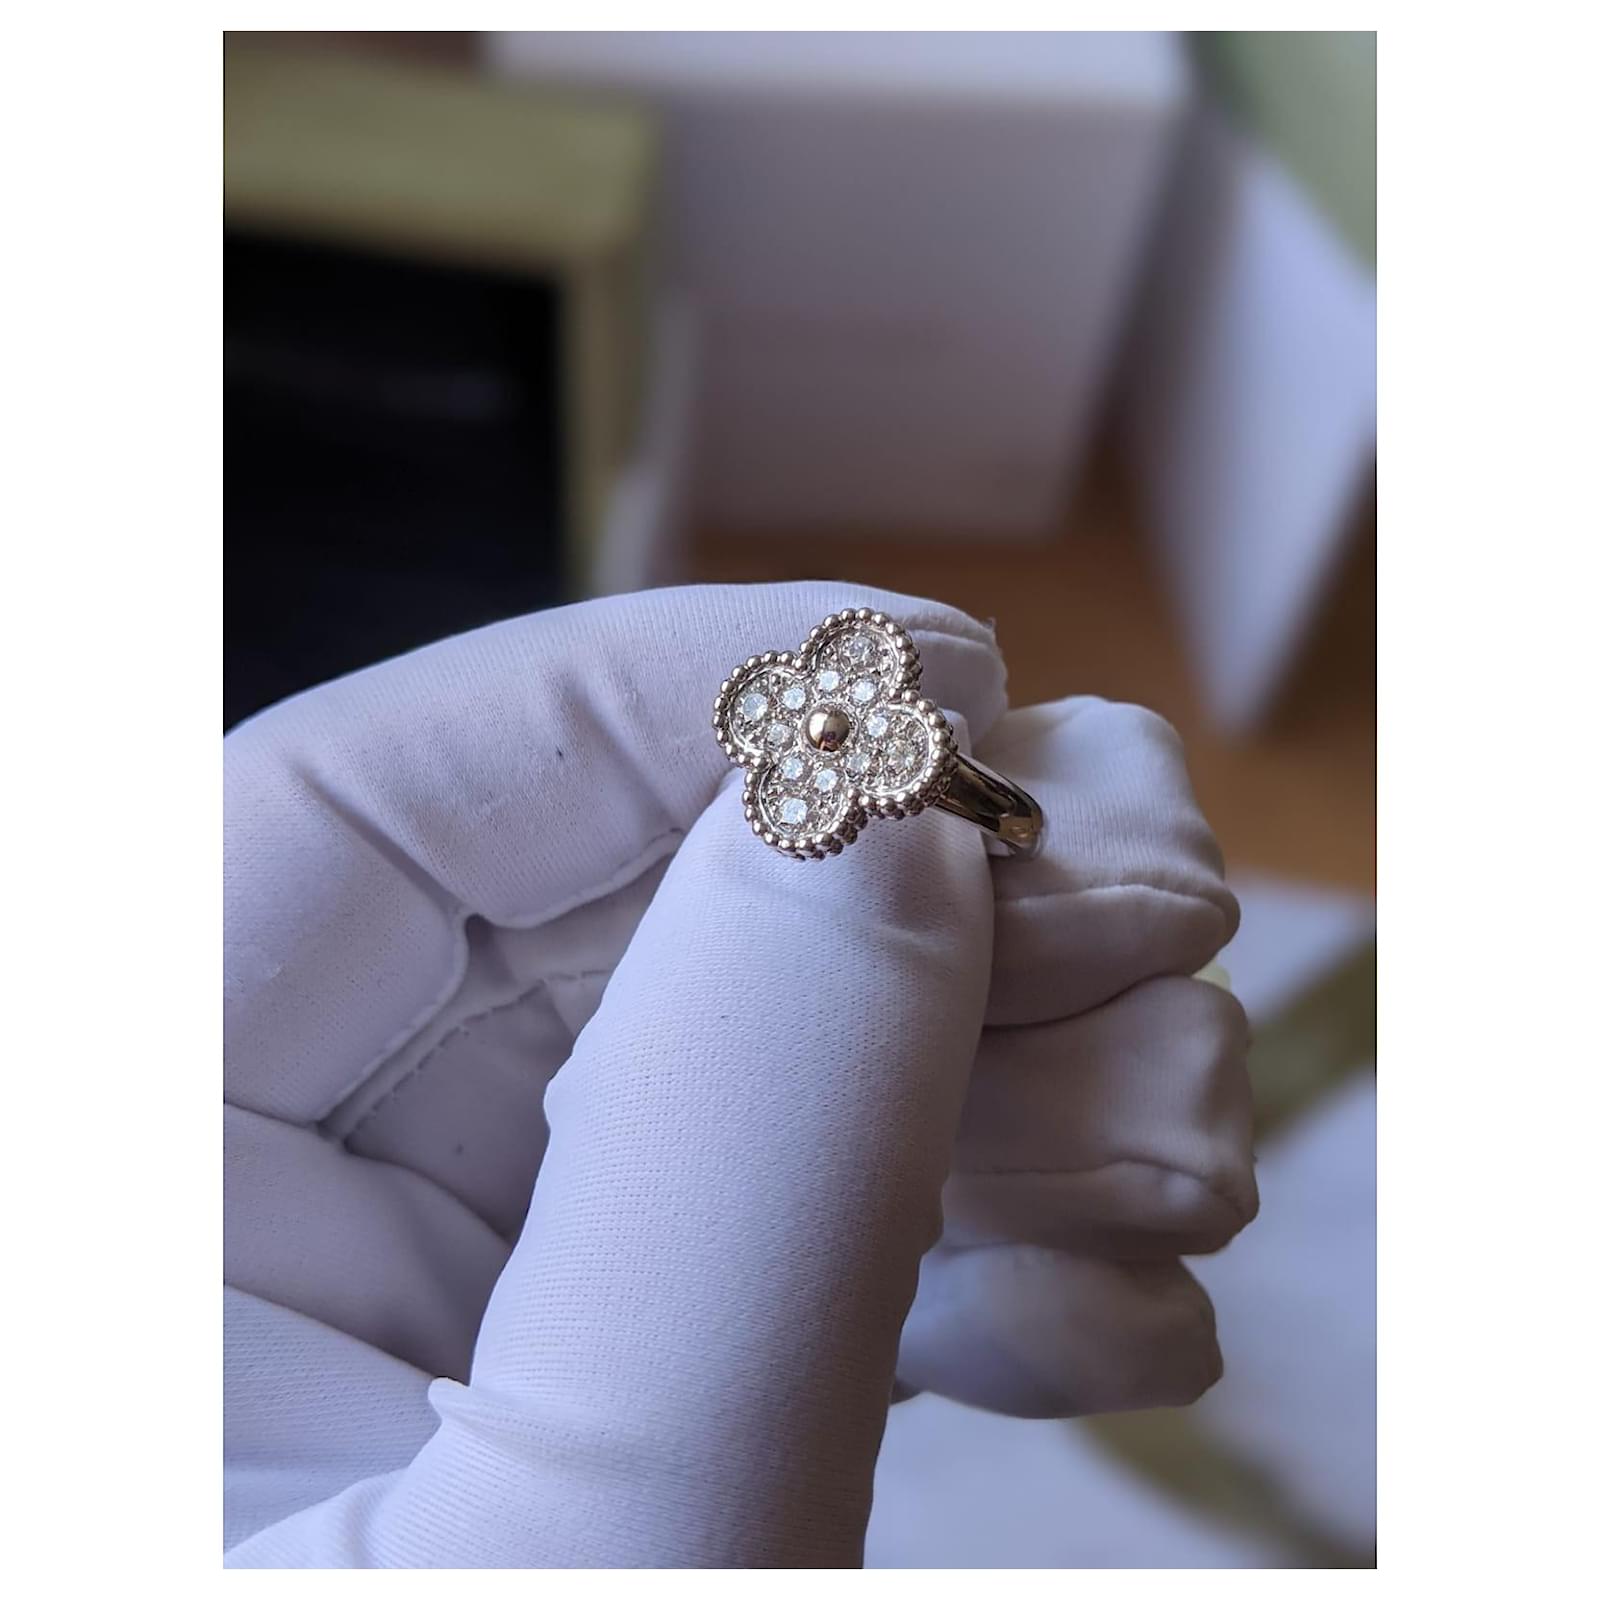 Van Cleef & Arpels Vintage Alhambra Diamond Ring 18K Yellow Gold